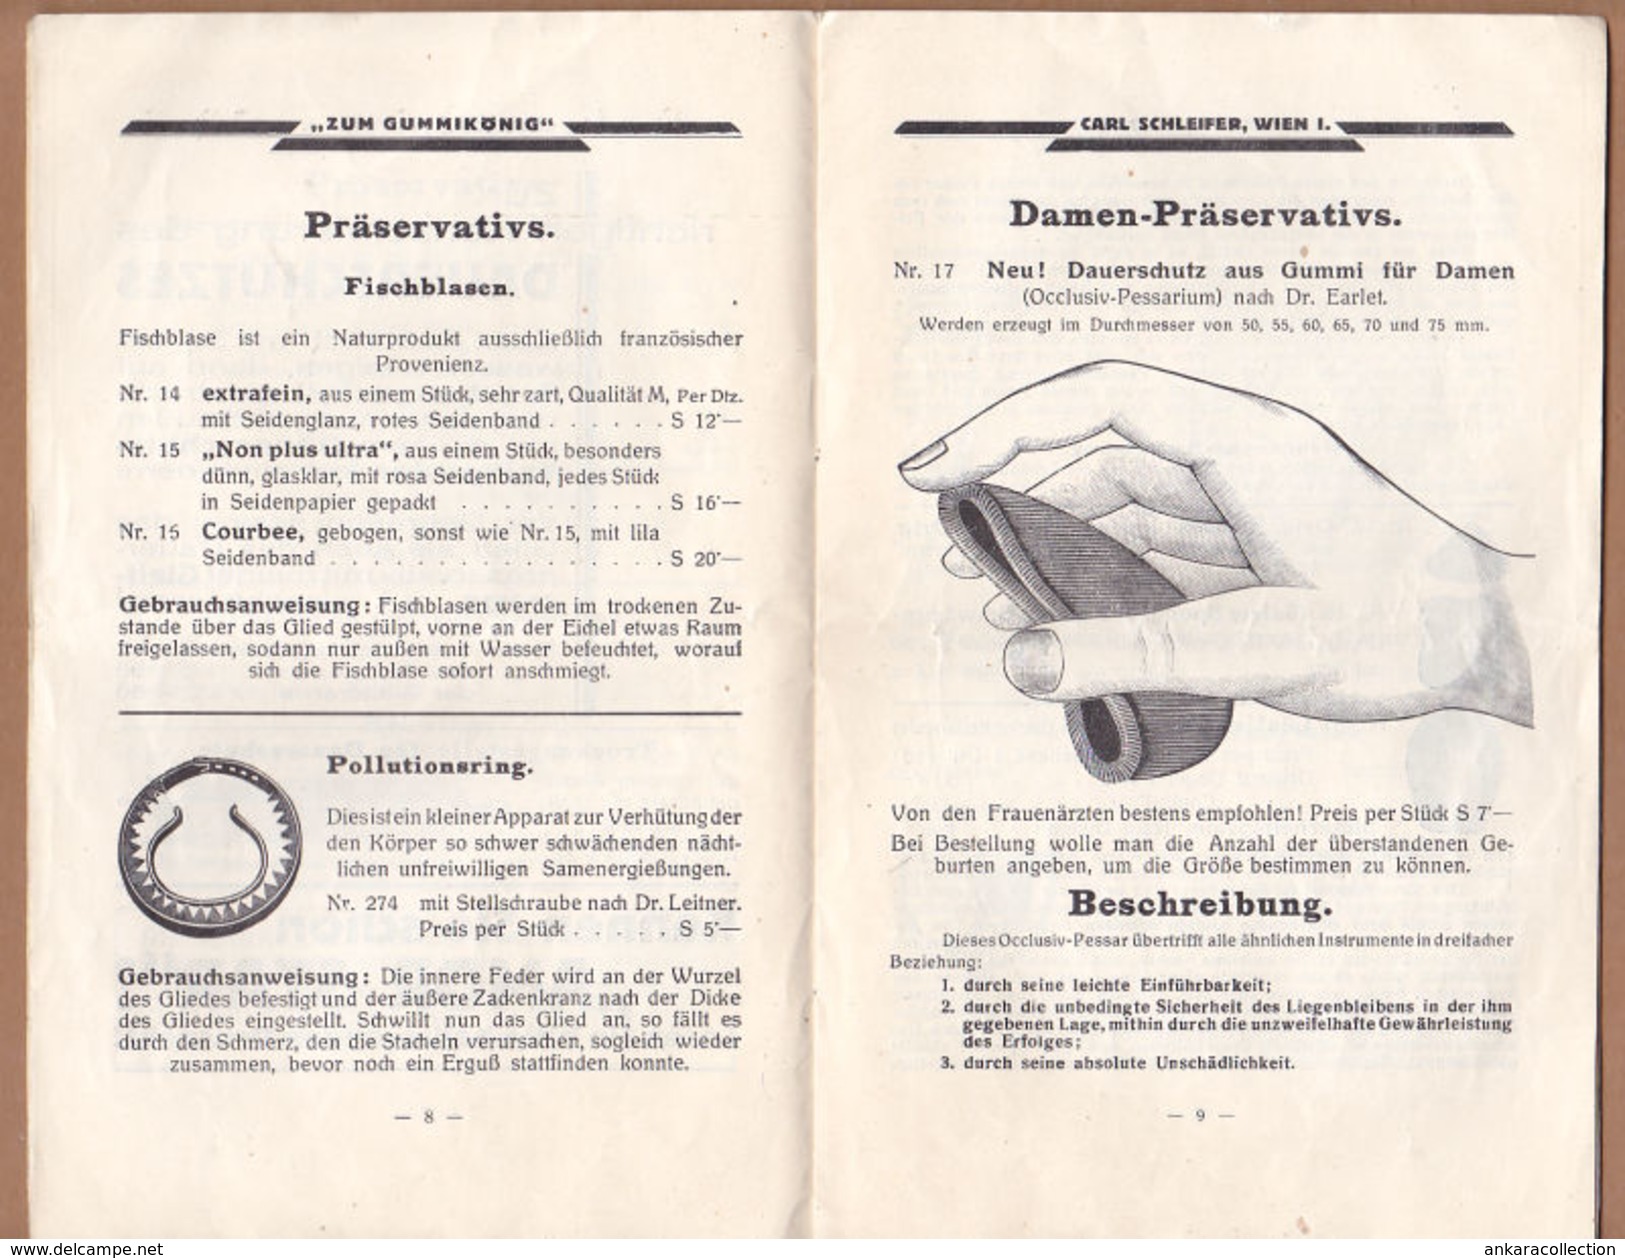 AC - PREISLISTE HYGIENISCHE GUMMI SPEZIALITATEN 1931 BOOKLET - Austria